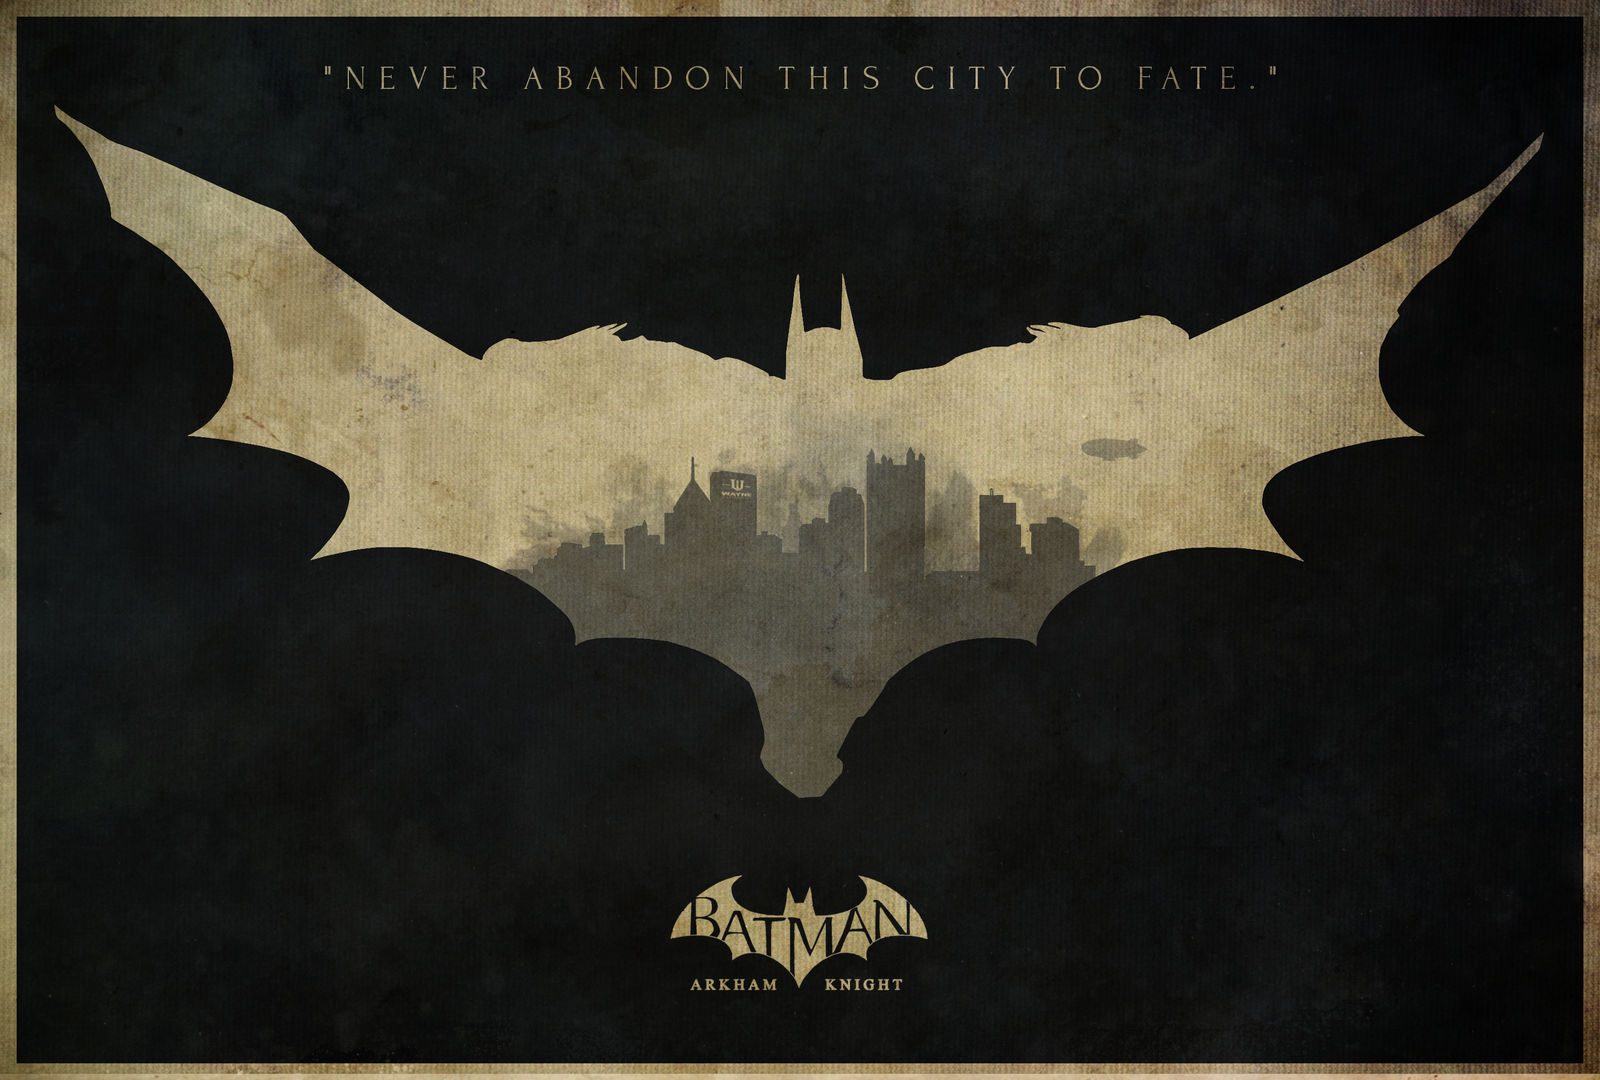 Batman Arkham Knight Poster Wallpapers